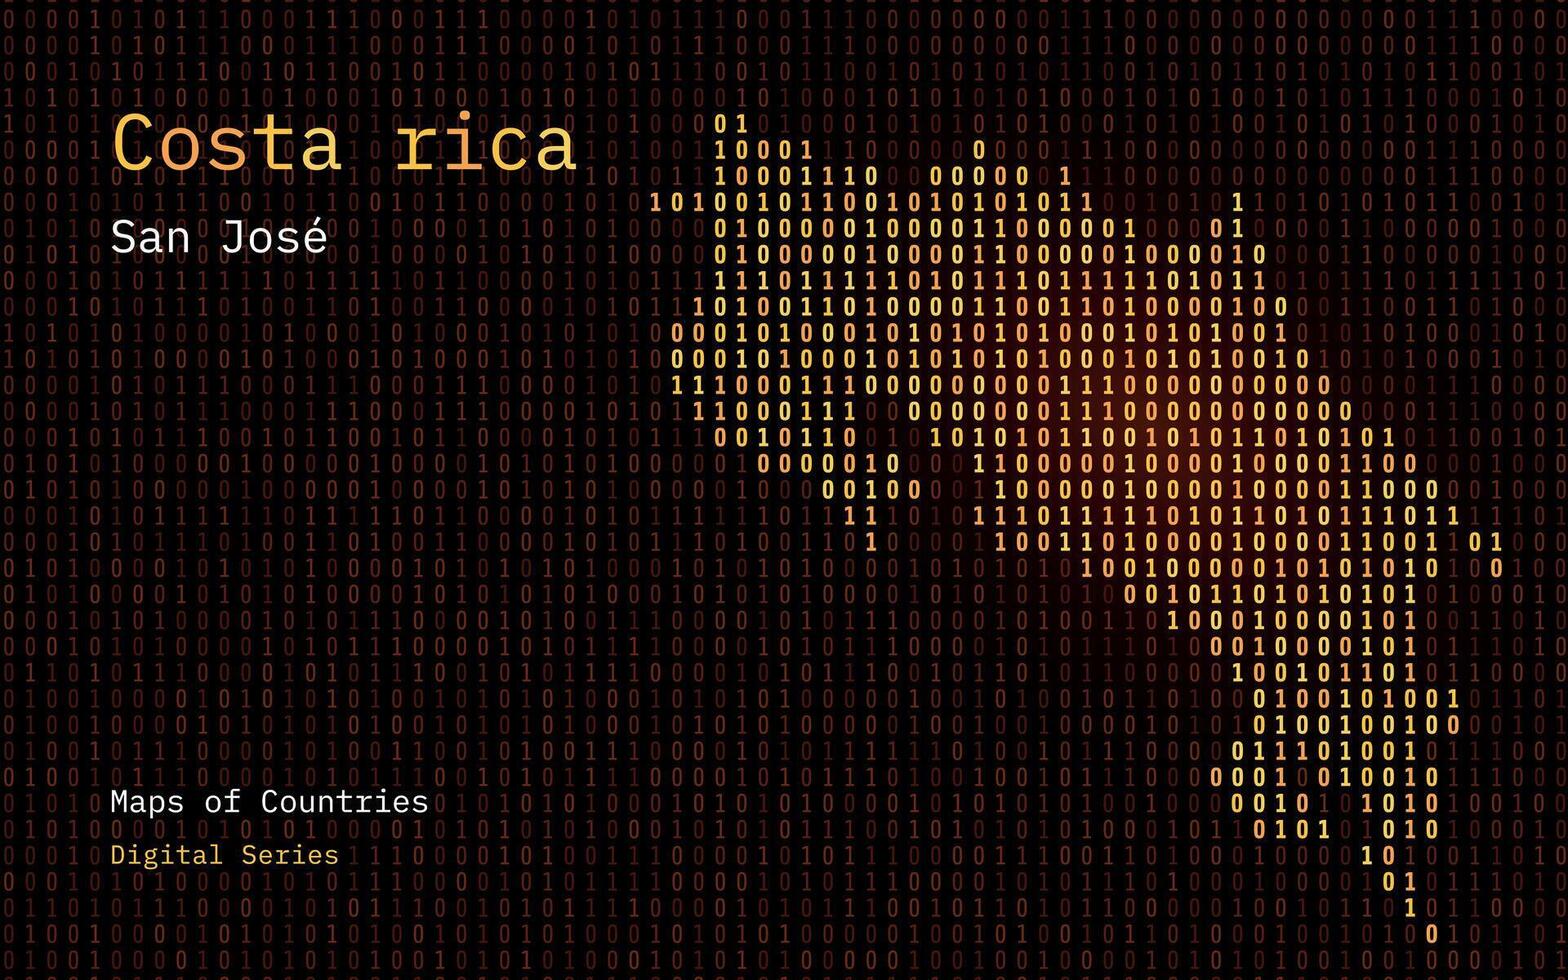 Costa Rica Map Shown in Binary Code Pattern. Matrix numbers, zero, one. World Countries Vector Maps. Digital Series